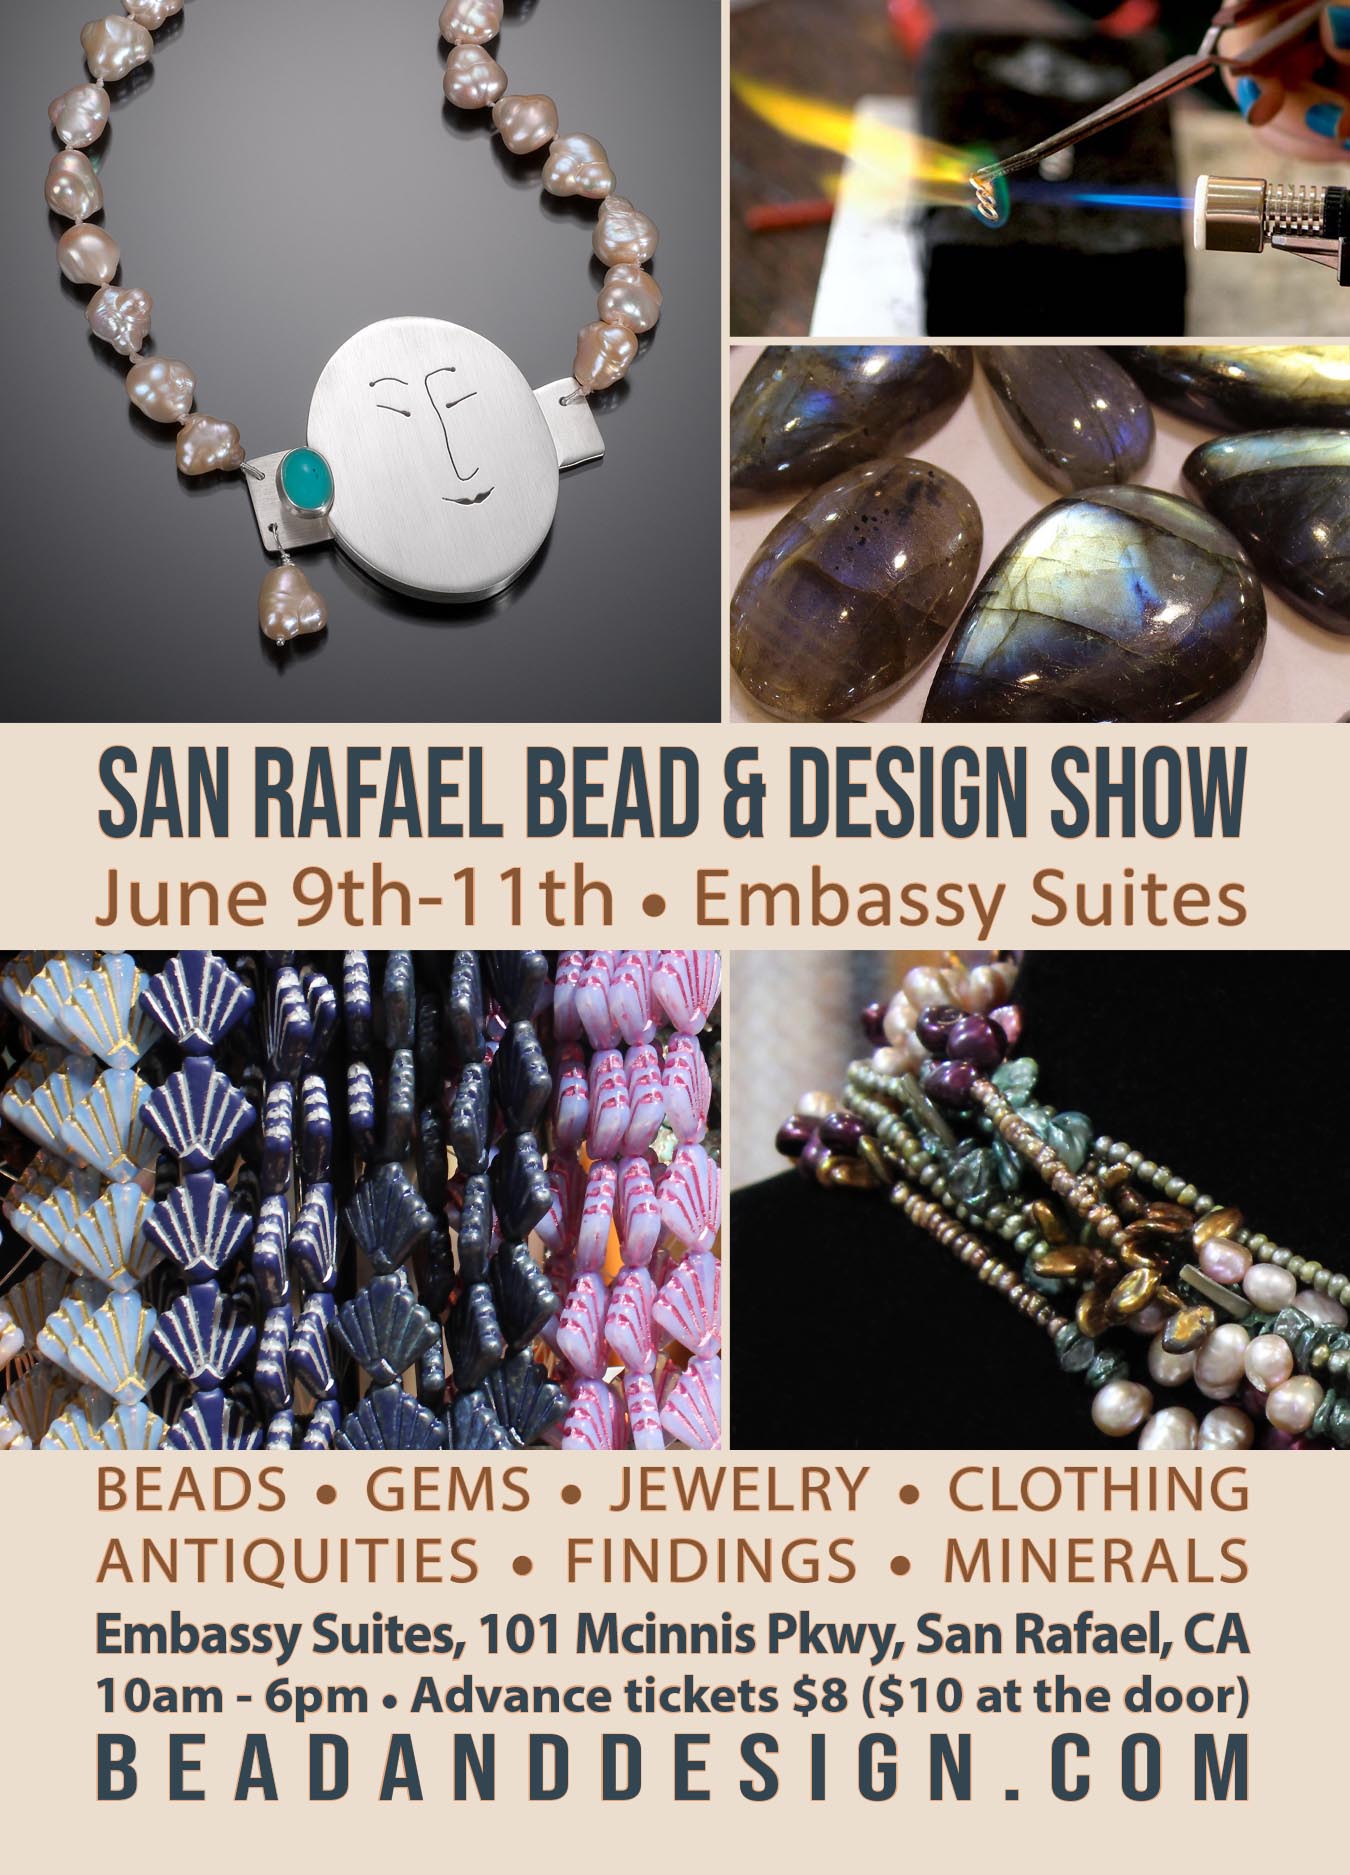 San Rafael Bead & Design show